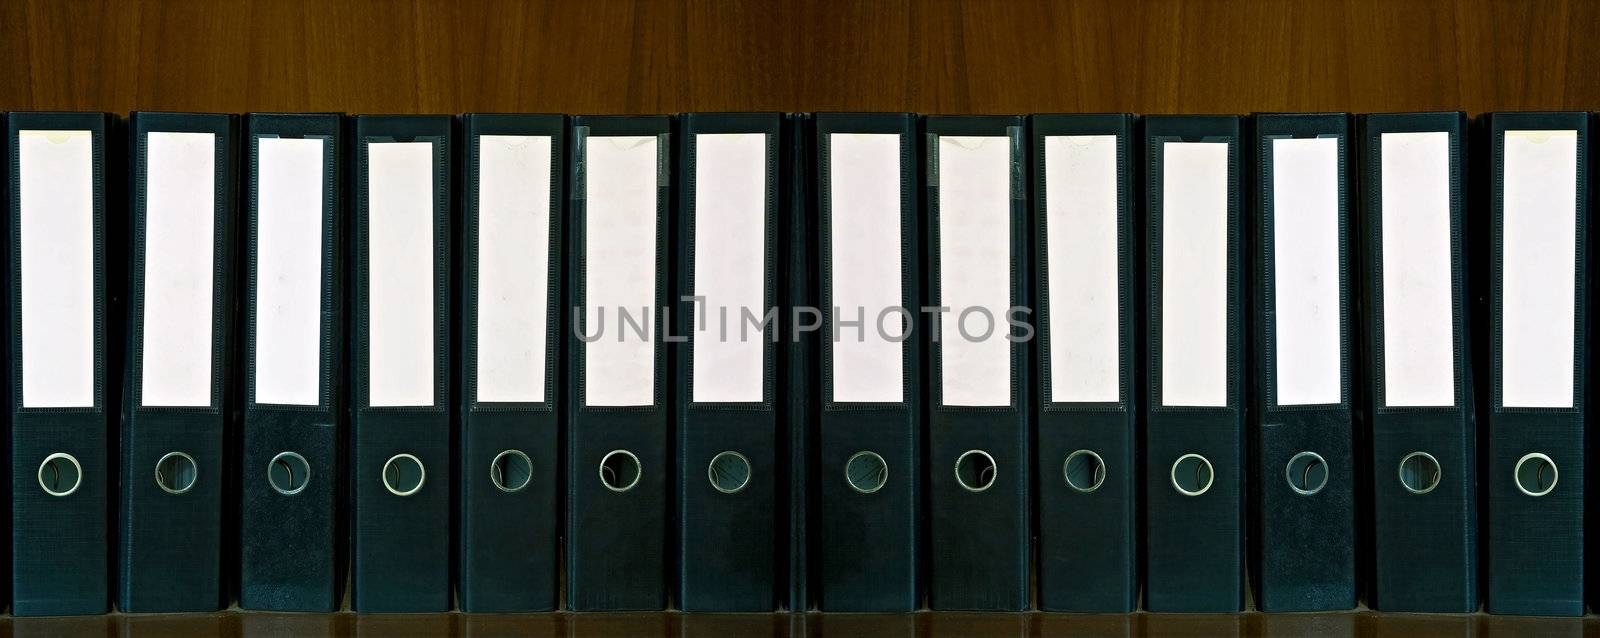 black document Folders and blank label